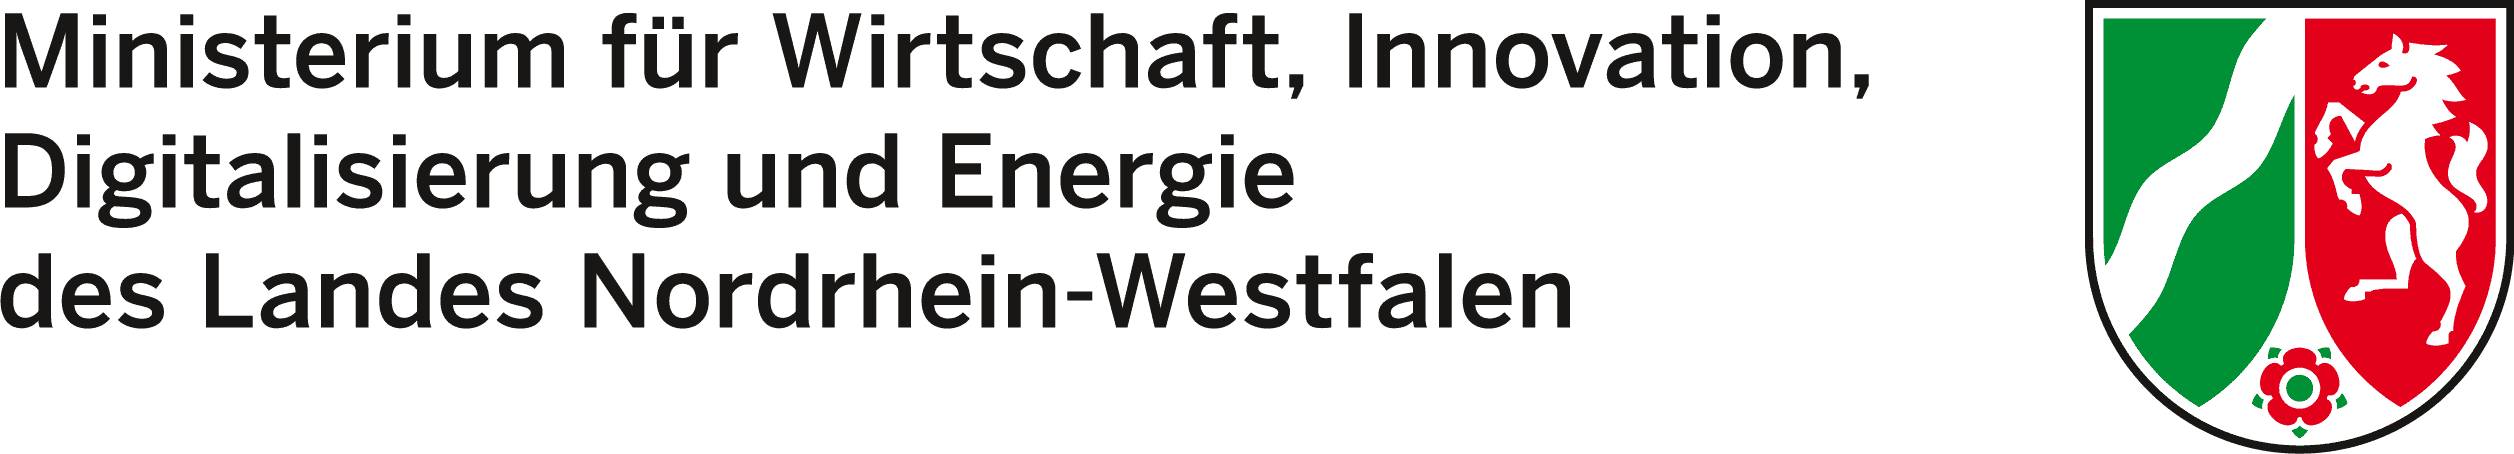 Logo North-Rhine-Westphalia Ministry for Economy, Innovation, Digitalisation and Energy